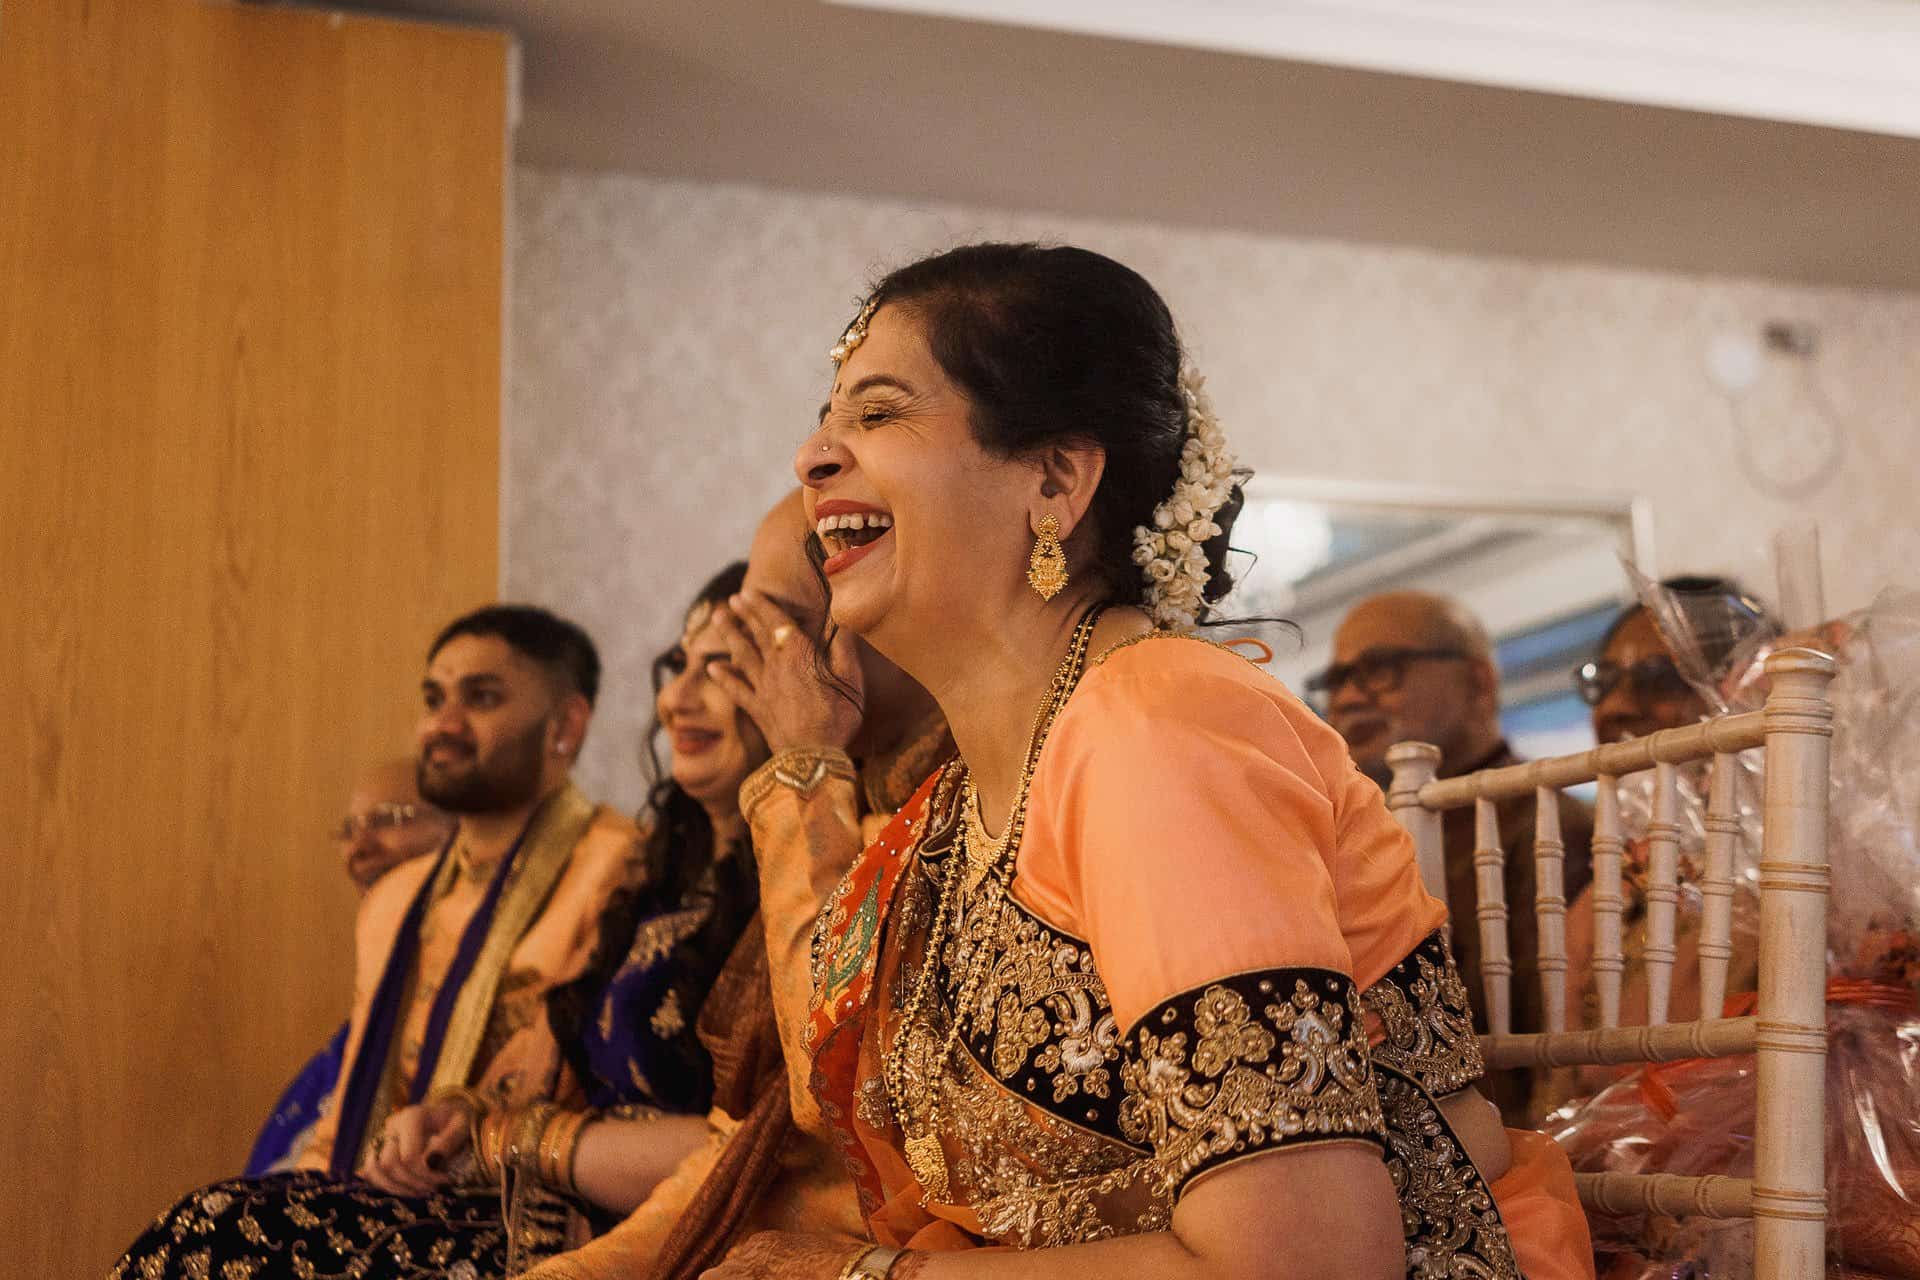 shendish manor hindu wedding photos